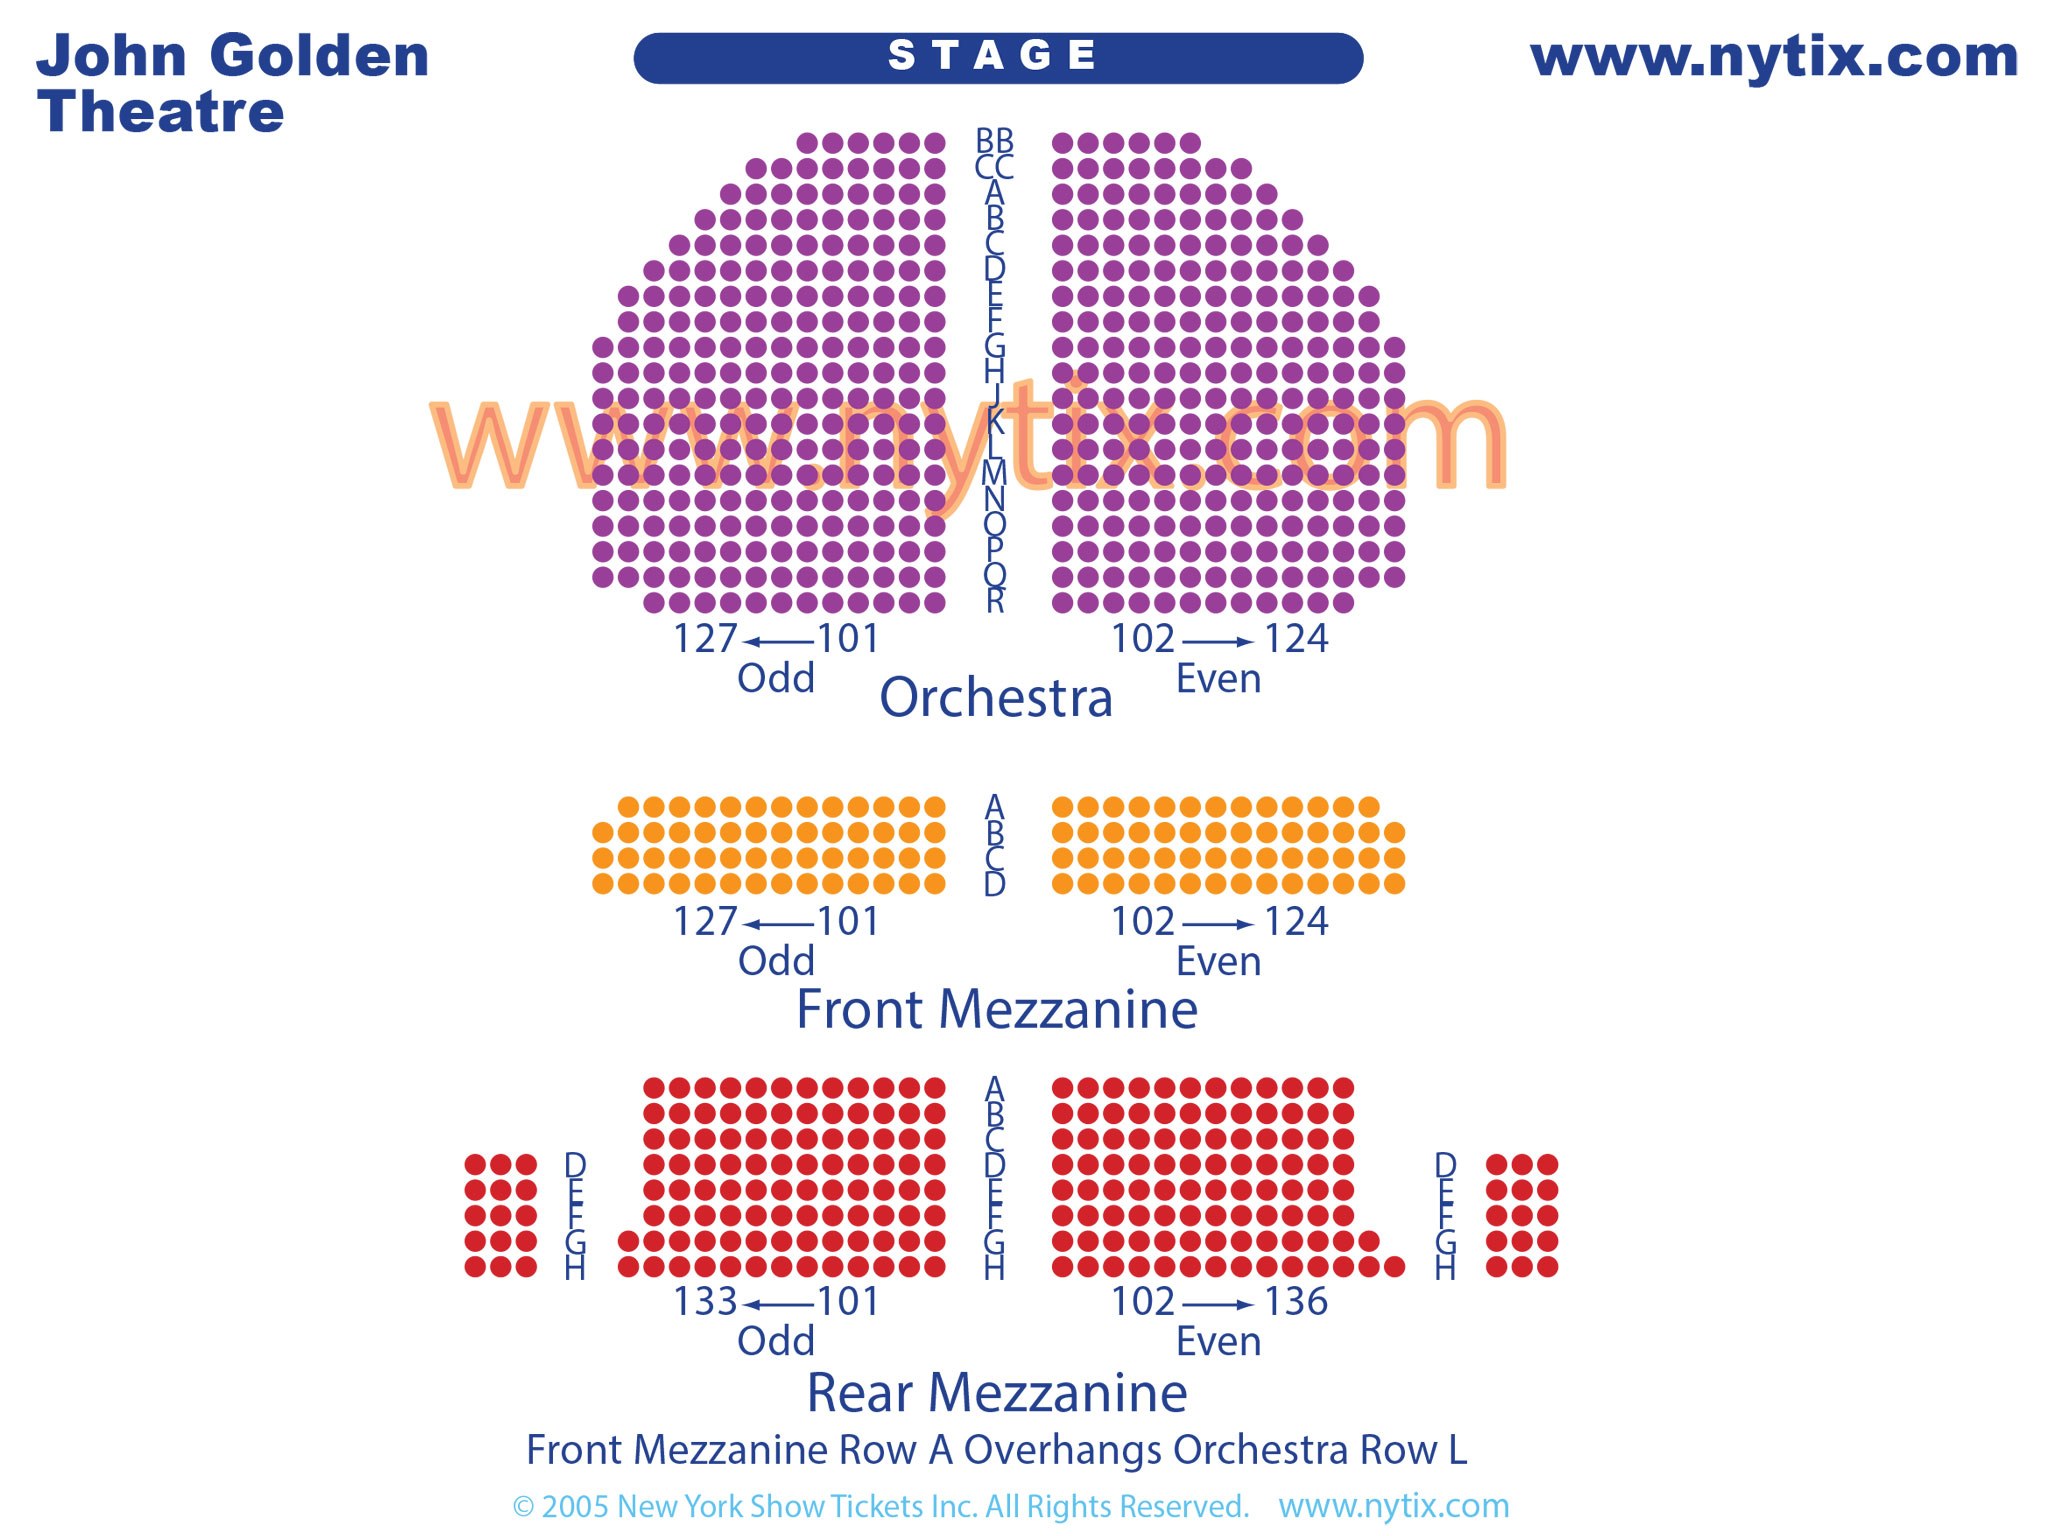 John Golden Broadway Theatre Seating Chart